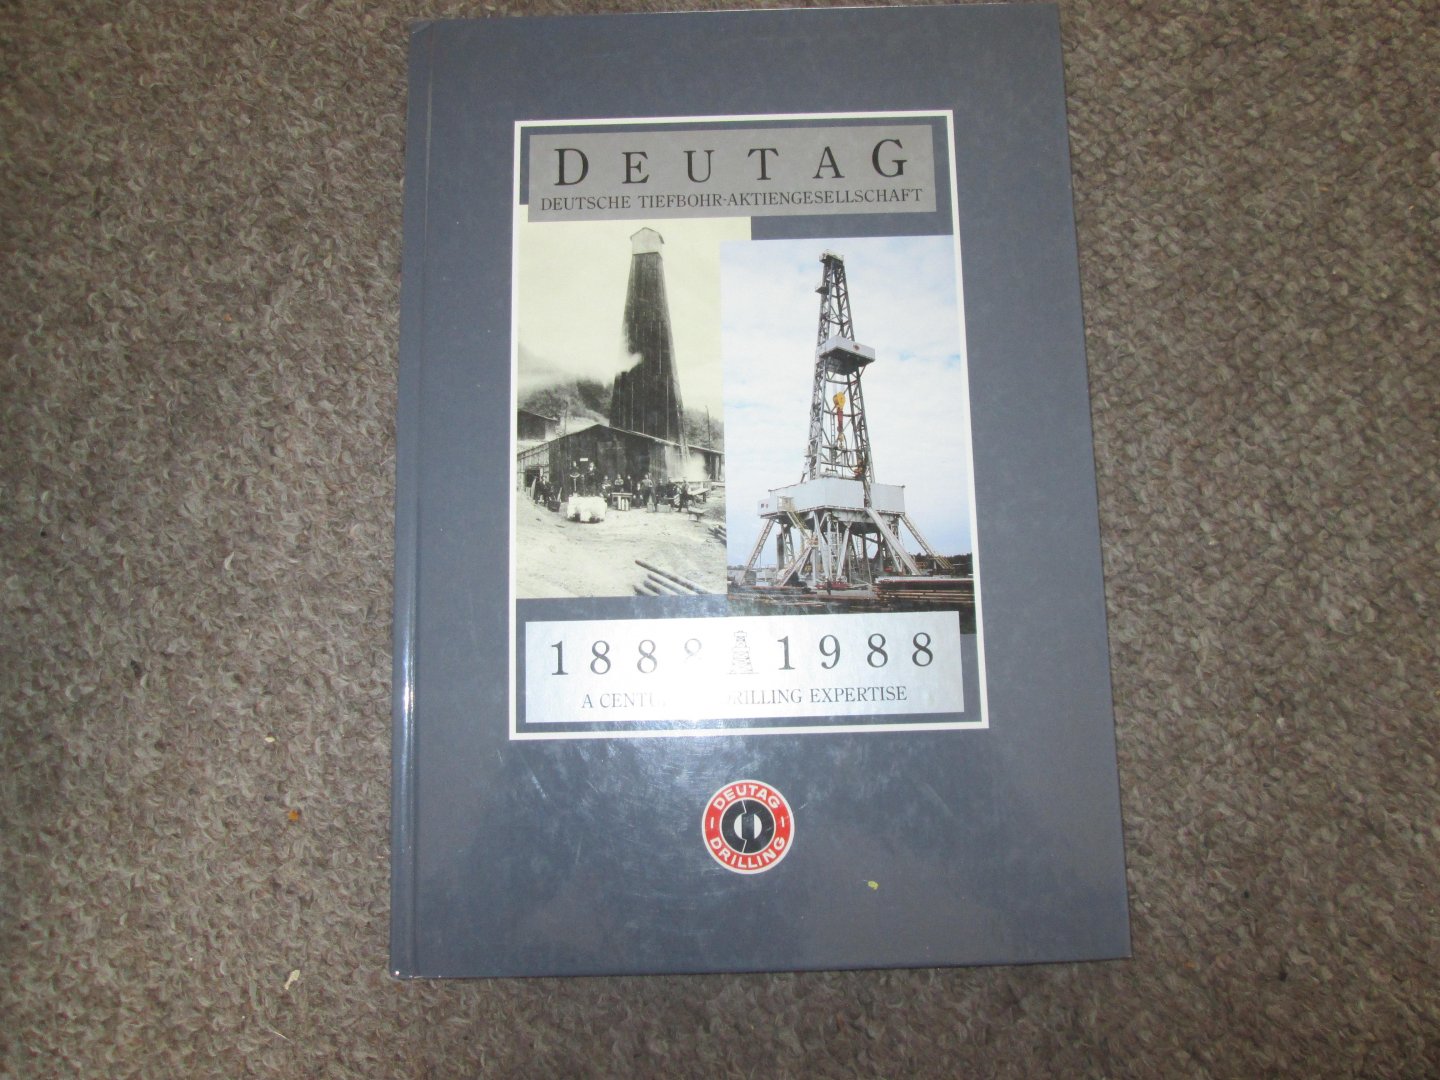 jubileumboek - DEUTAG - Deutsche Tiefbohr Aktiengesellschaft 1888 - 1988 ( a century of drilling expertise )